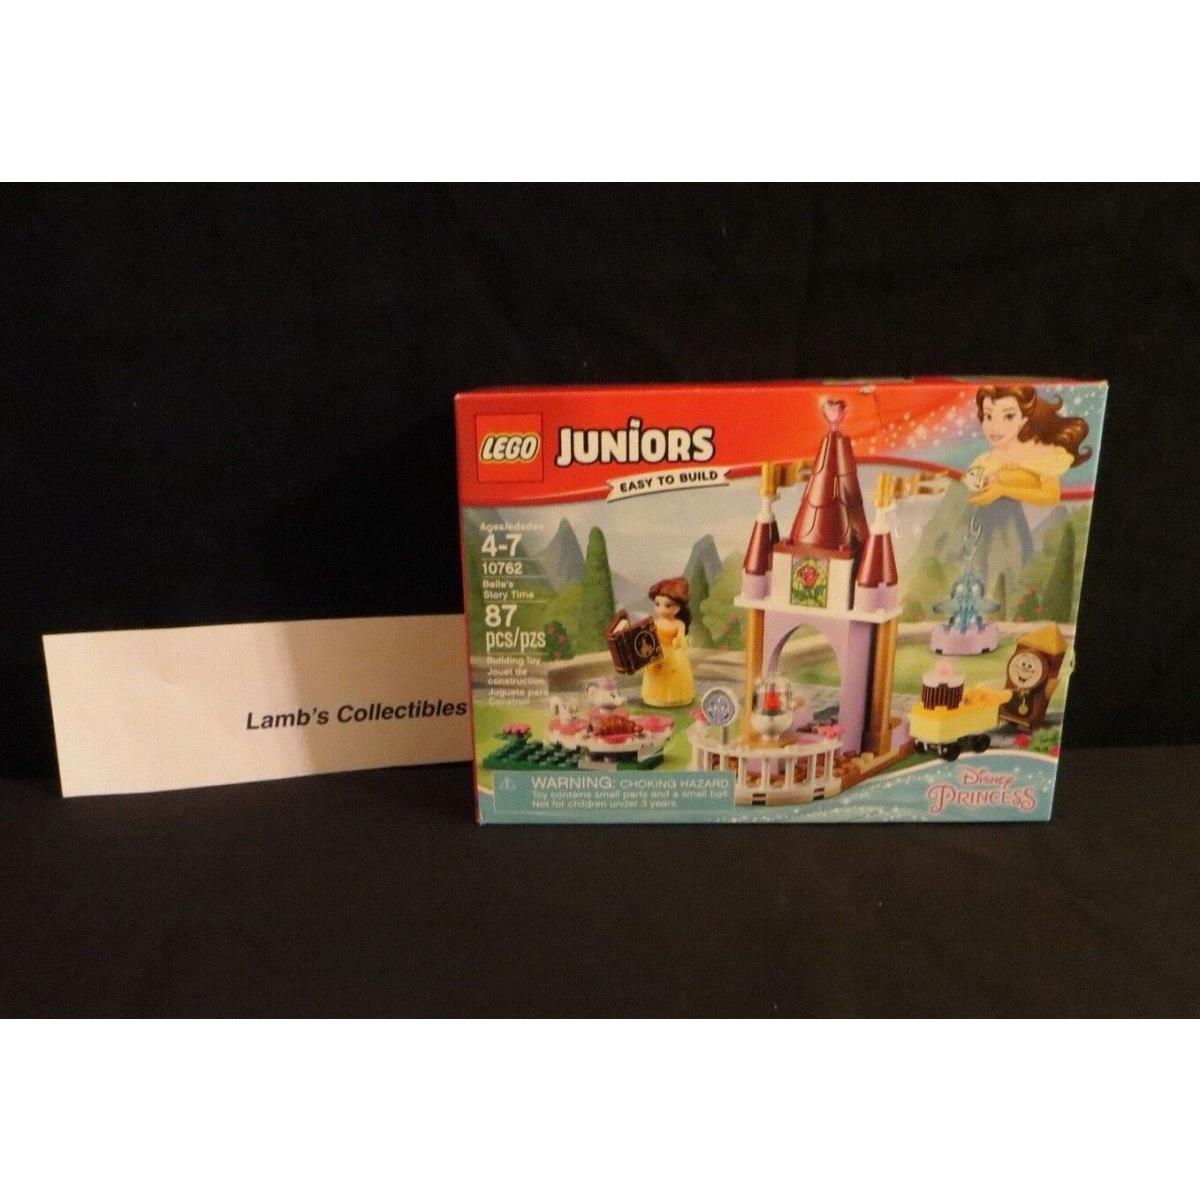 Belle`s Story Time Lego Juniors Disney Set 10762 - 87 Pieces Building Bricks Toy